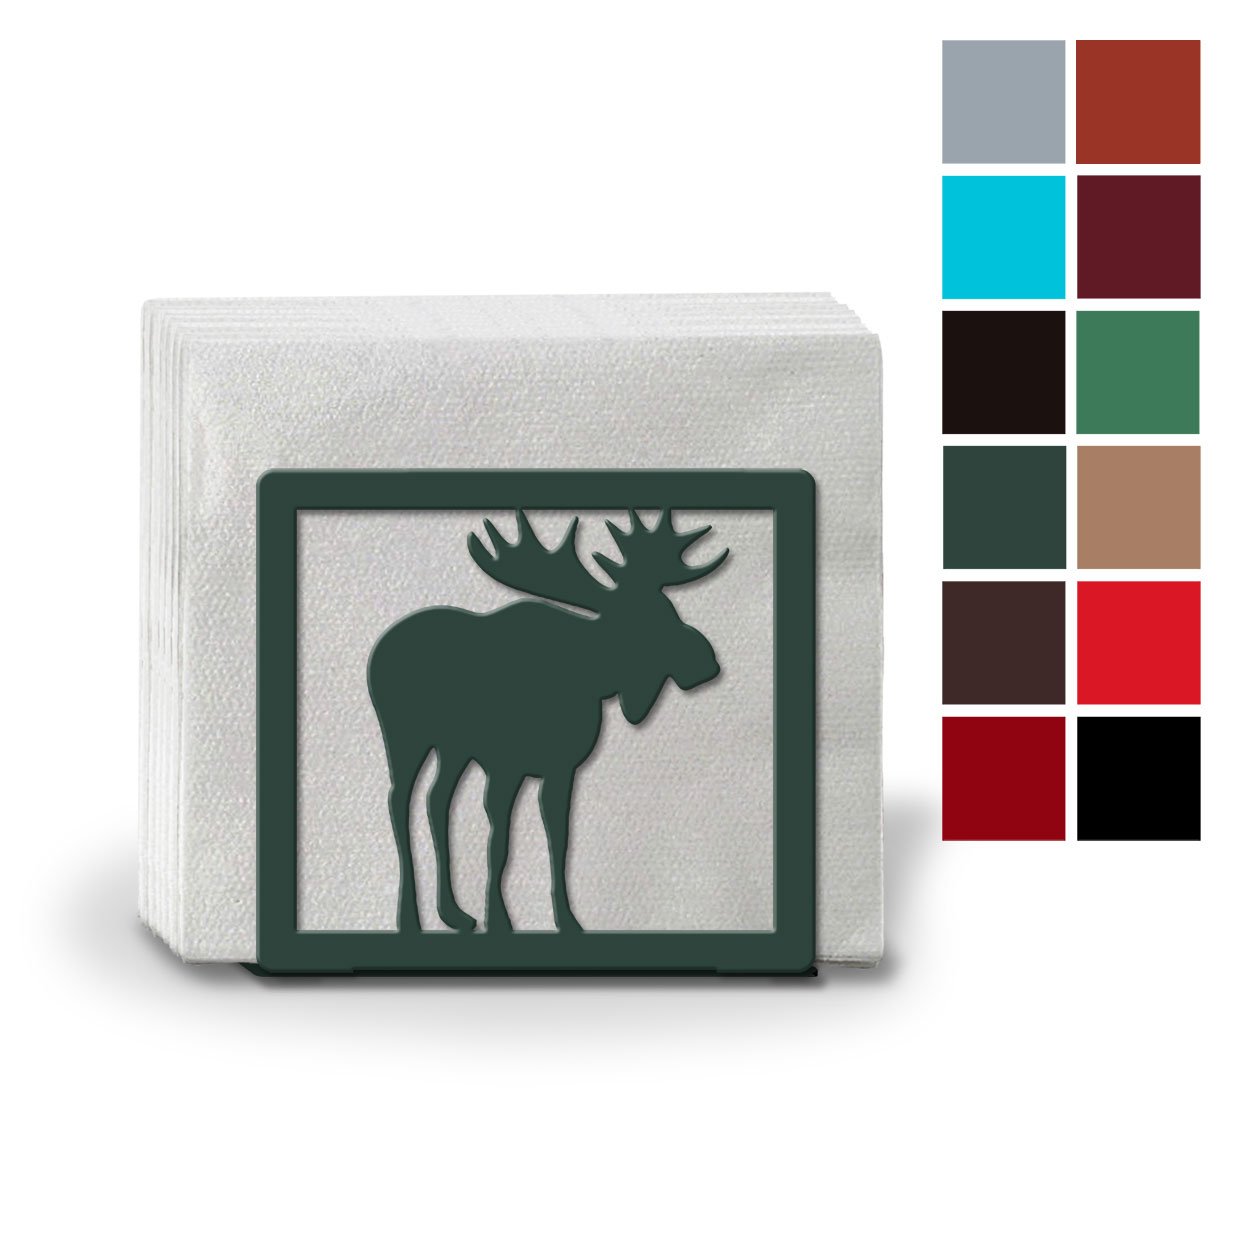 621116 - Moose and Trees Metal Napkin or Letter Holder - Choose Color